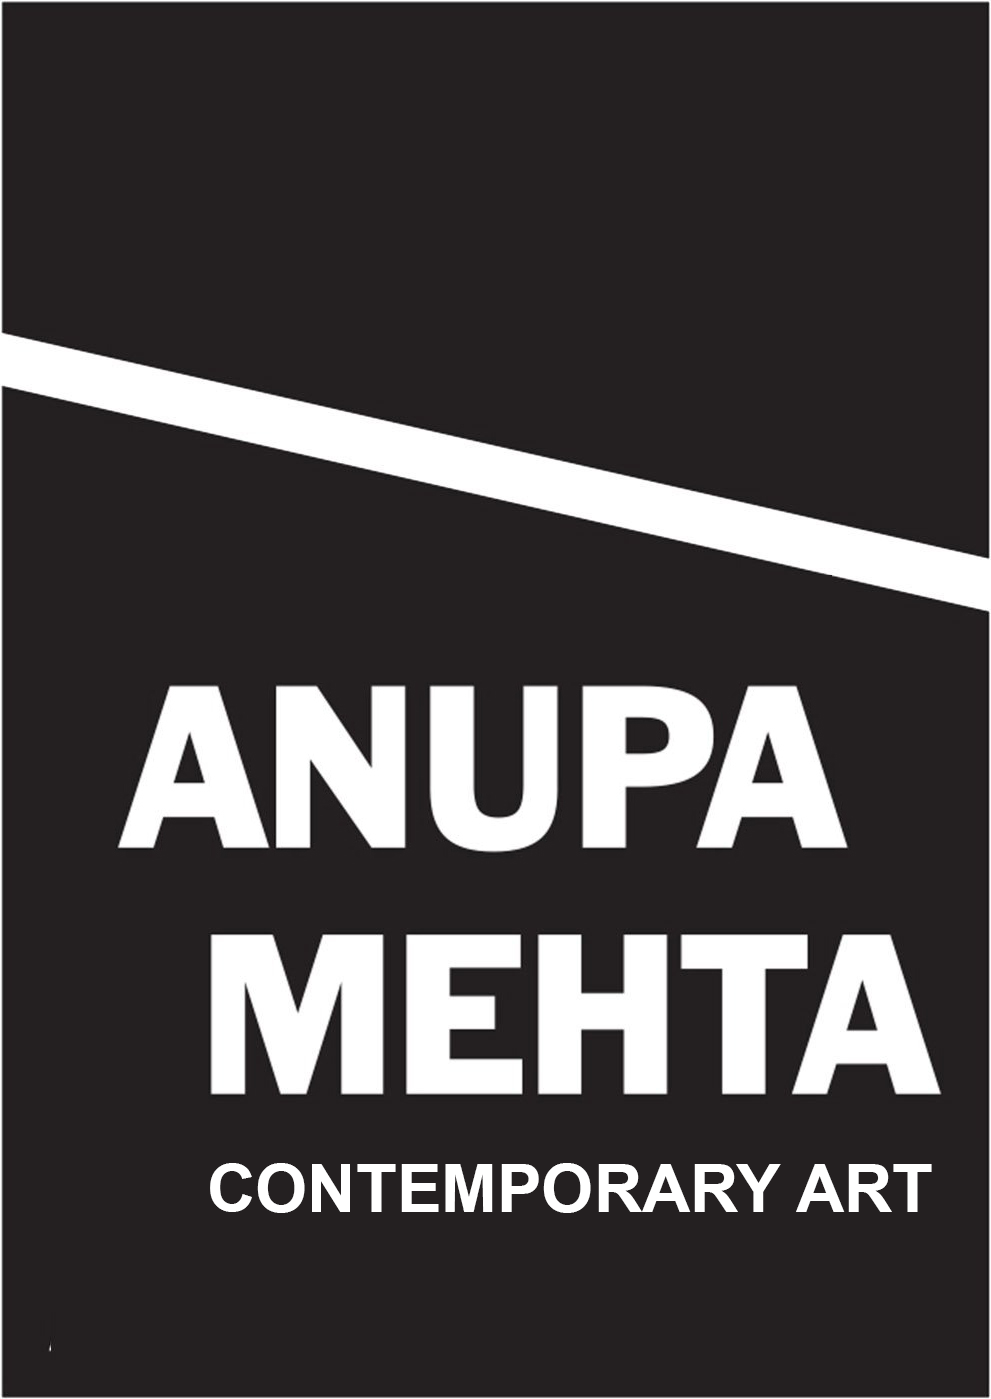 ANUPA MEHTA CONTEMPORARY ART